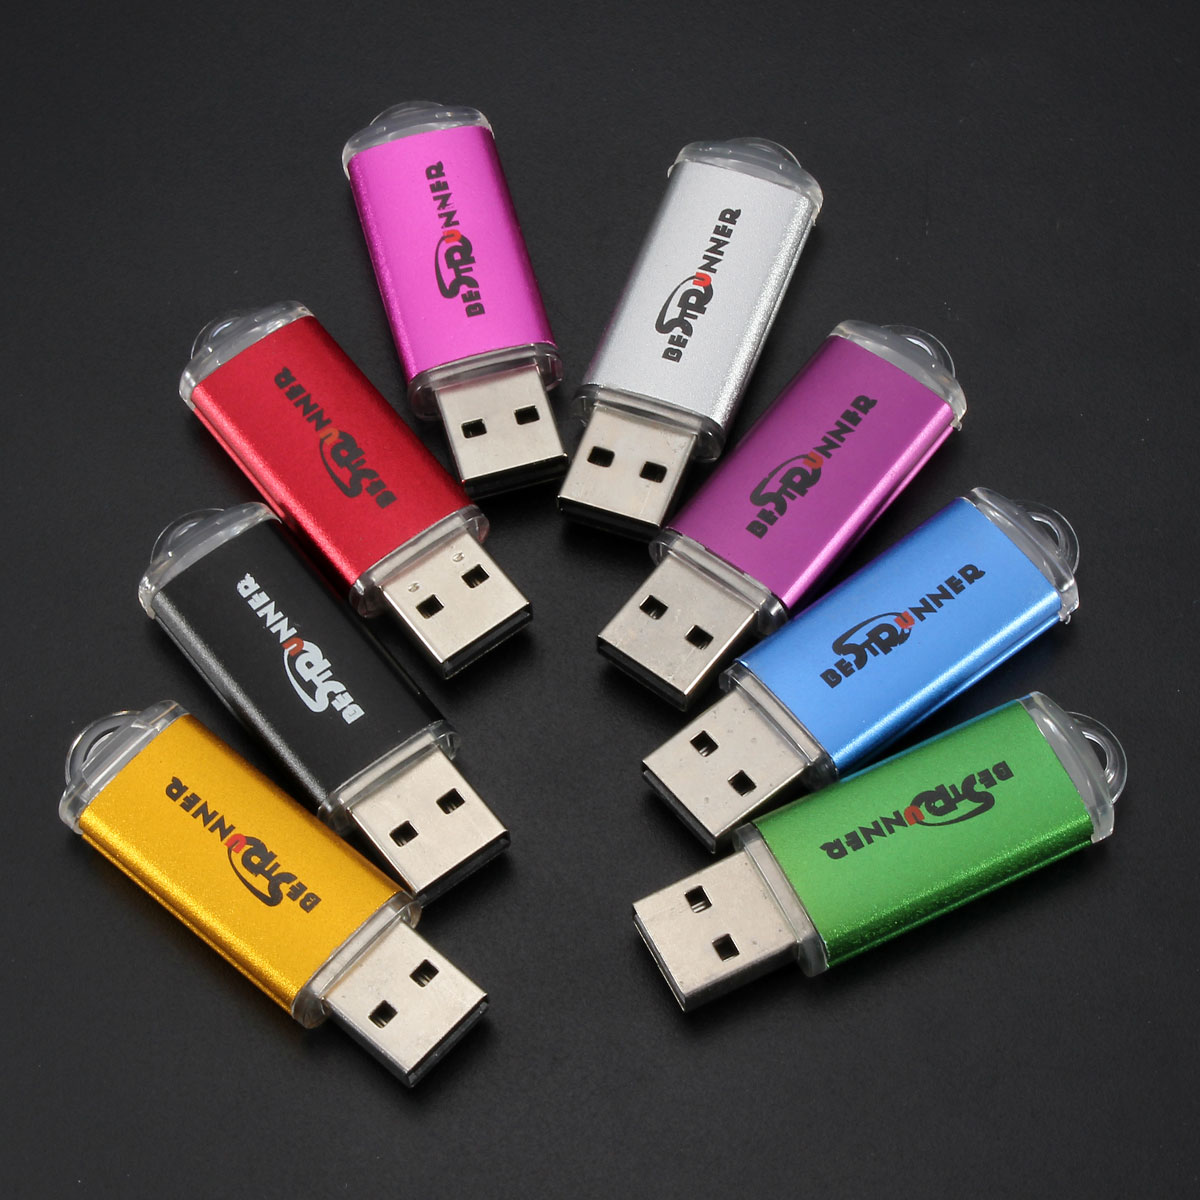 Bestrunner-Multi-Color-Portable-USB-20-1GB960M-Pendrive-USB-Disk-for-Macbook-Laptop-PC-1723018-14